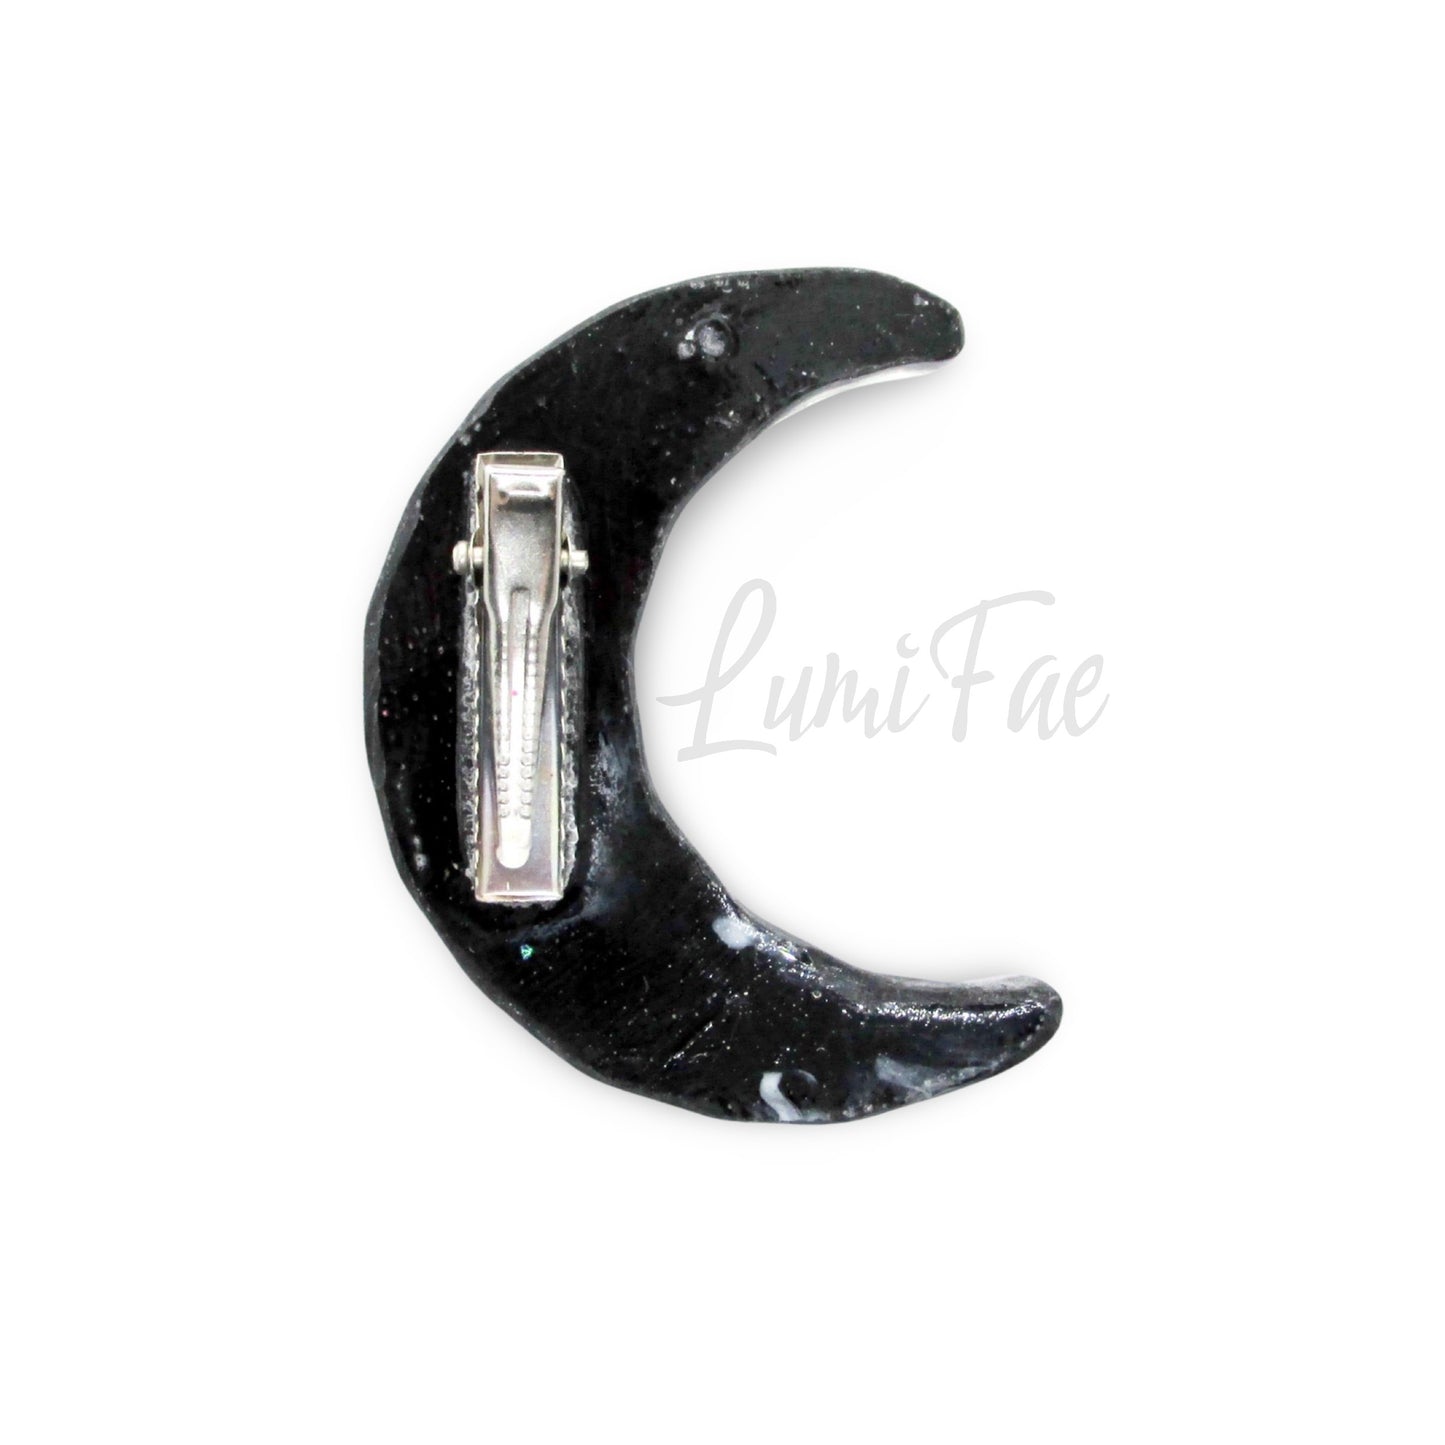 Cool Irridescent Black Moon Hair clip, 2.5”